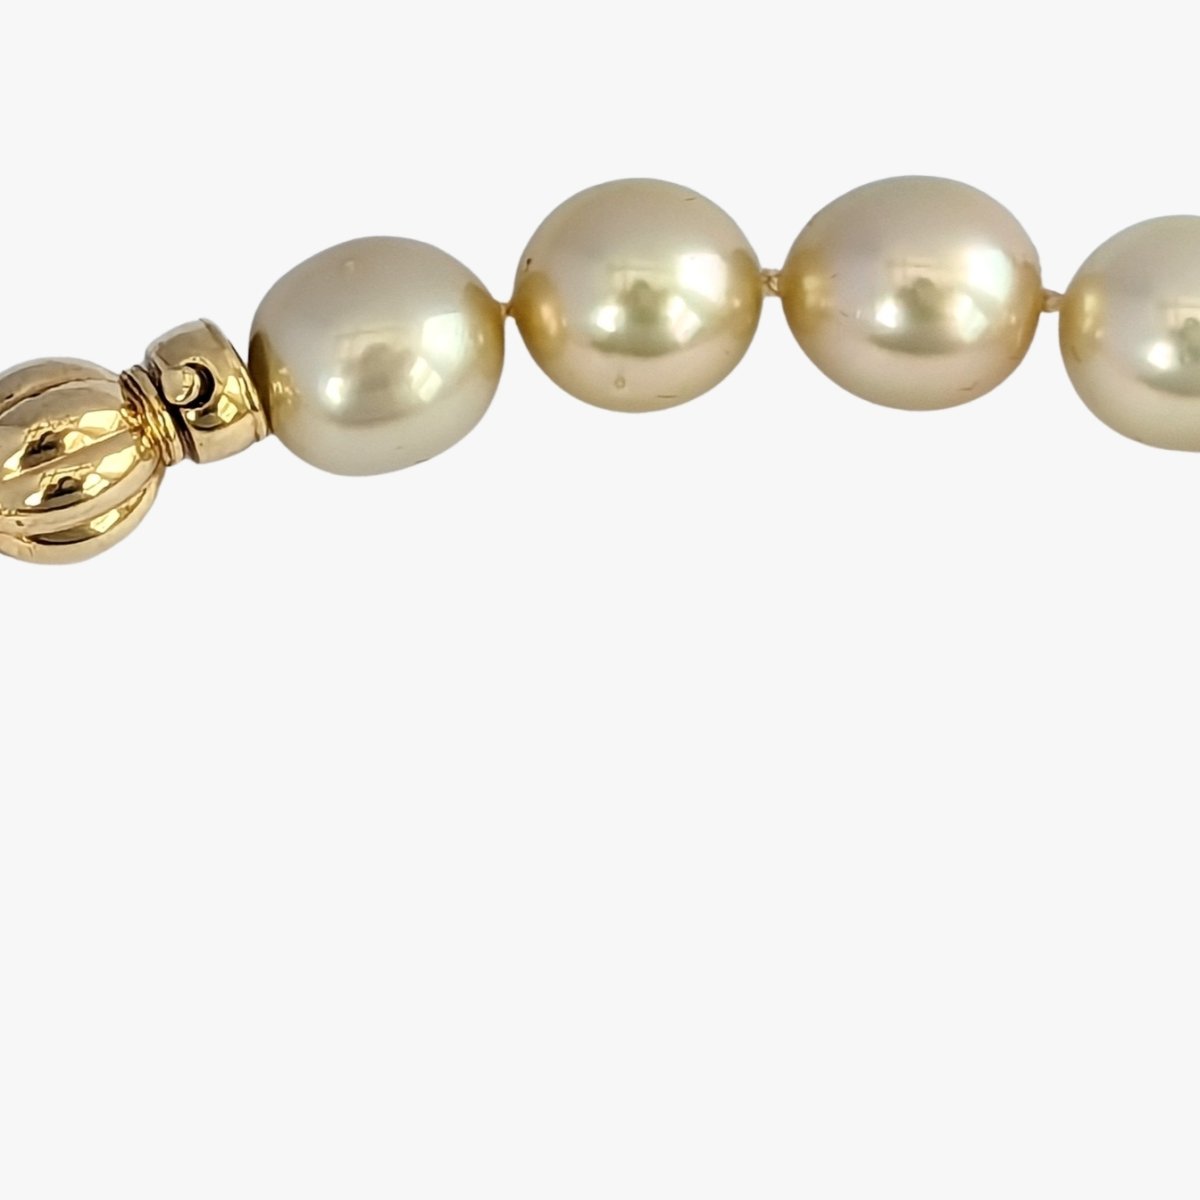 11-12mm Golden South Sea Pearl Necklace - Marina Korneev Fine Pearls